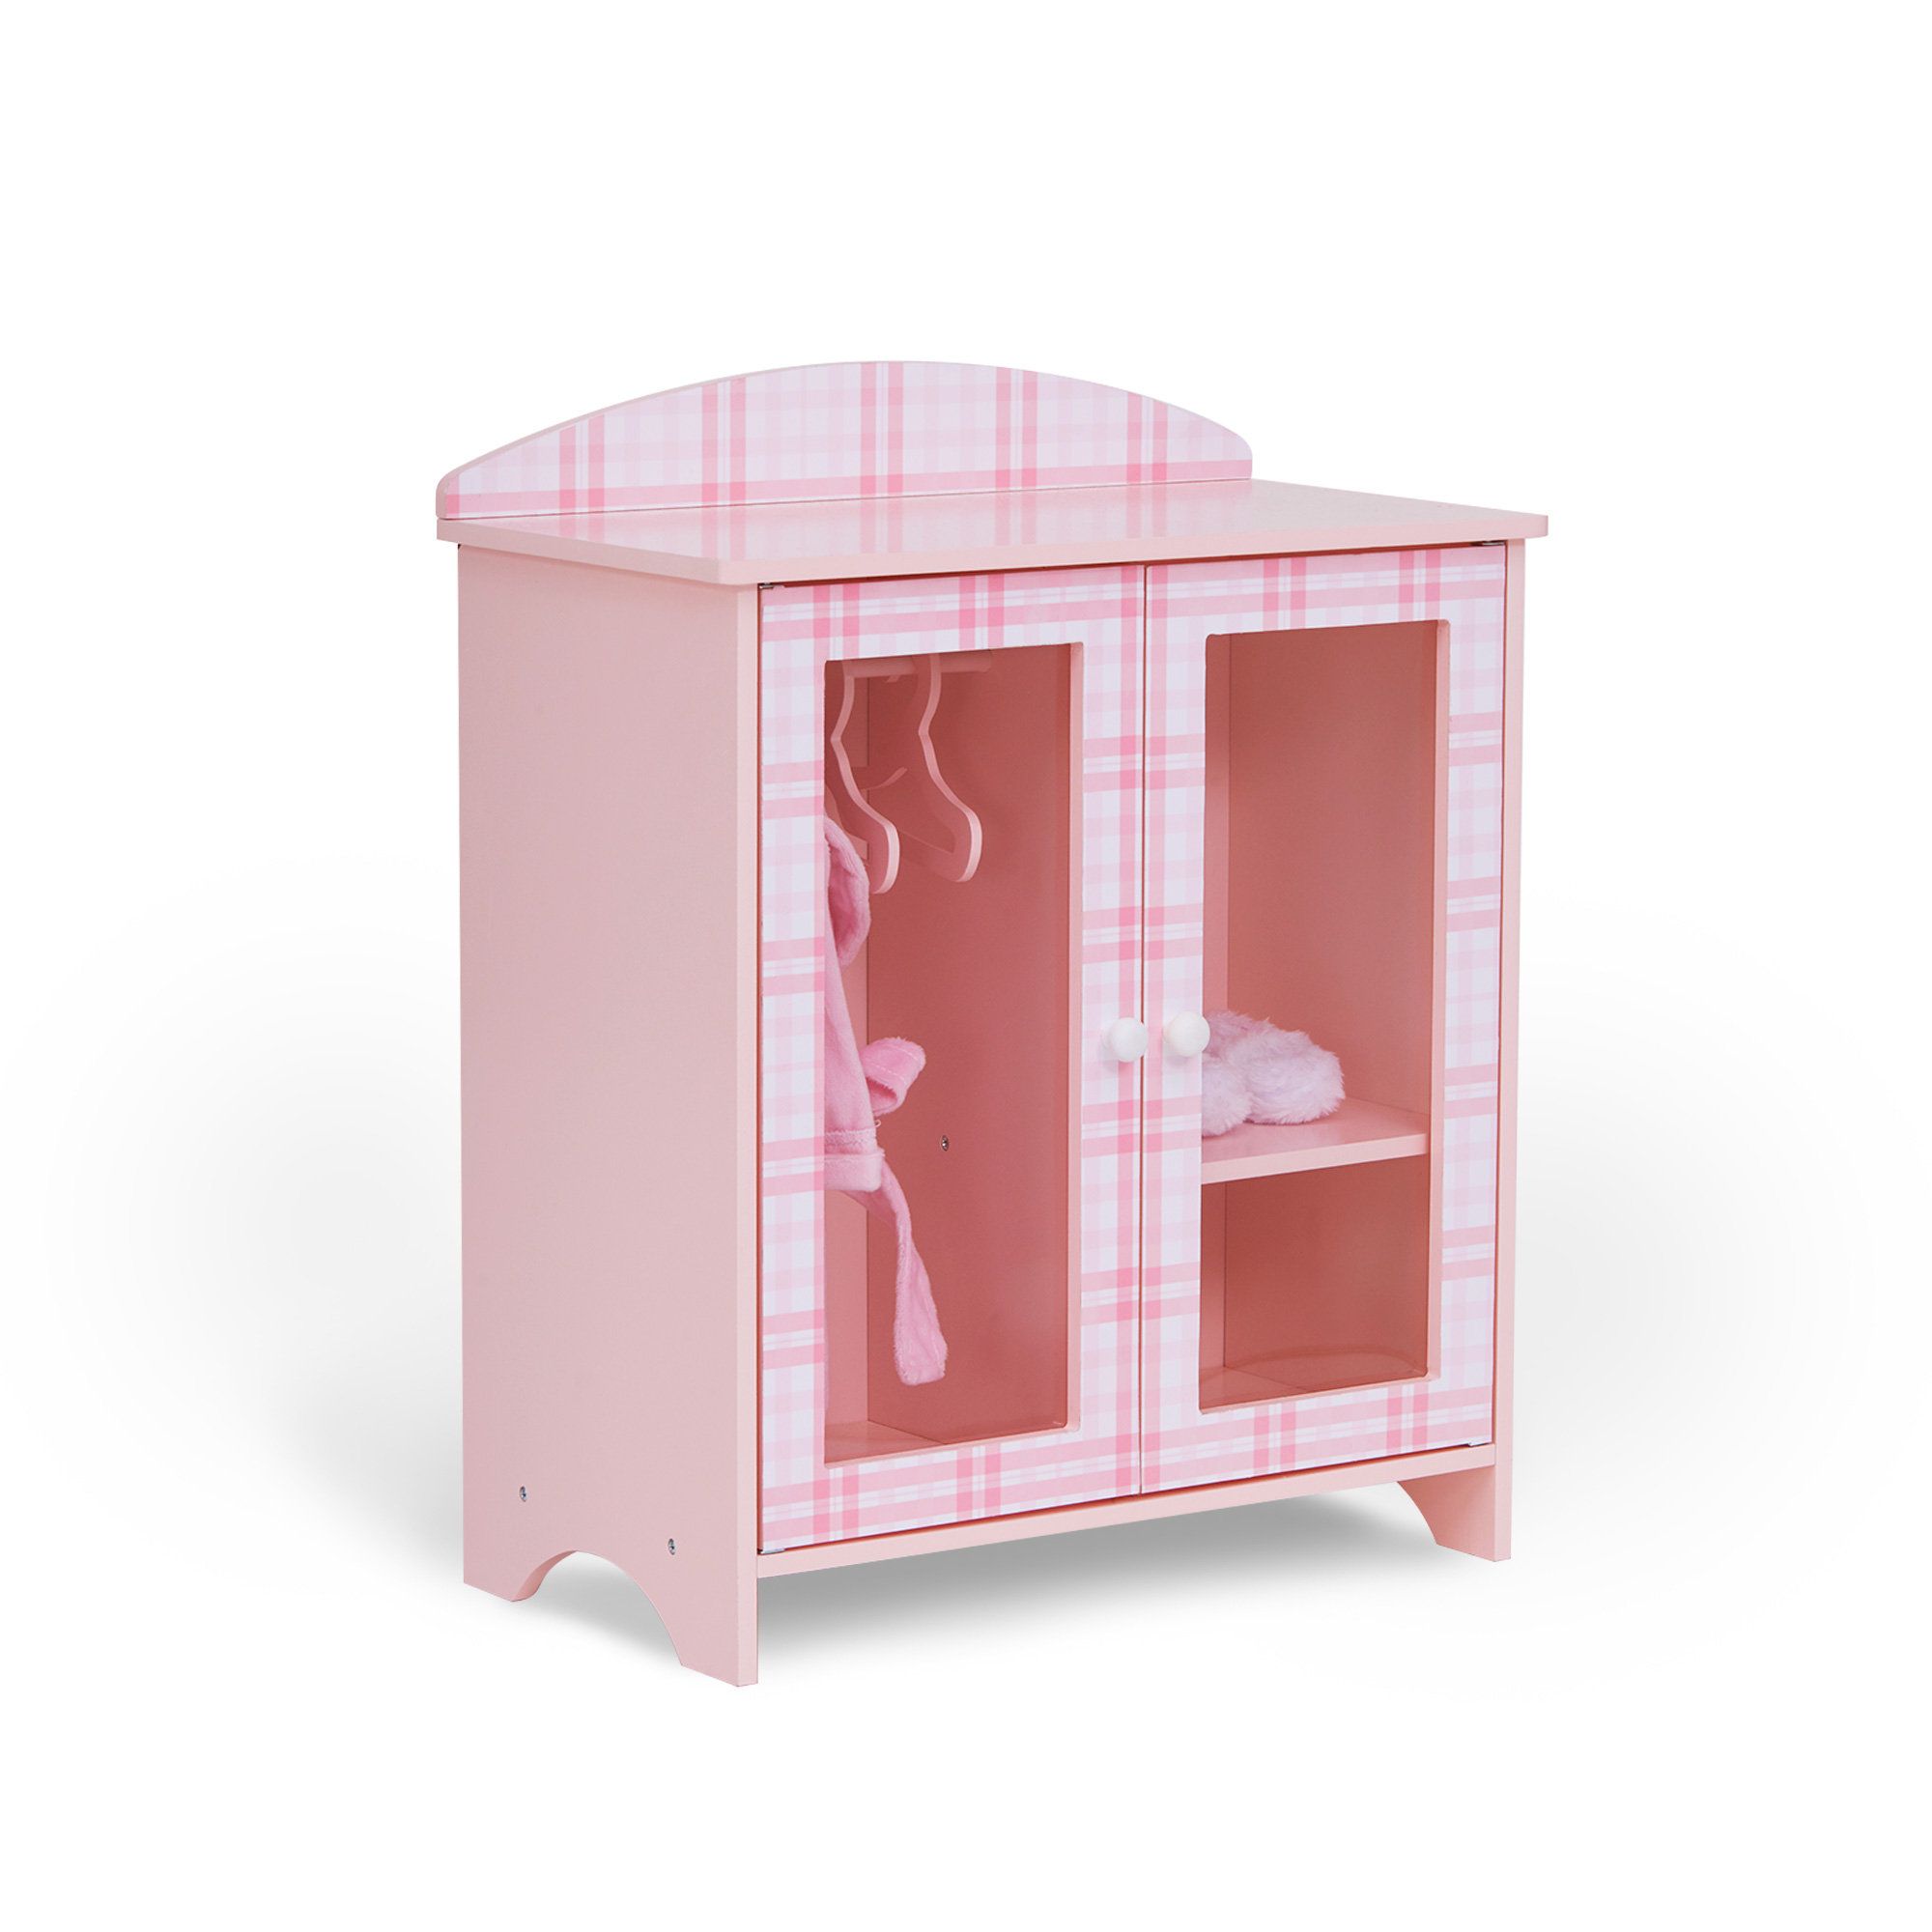 Sophia's Princess Closet Dollhouse Furniture And Accessories | Wayfair Inside Princess Wardrobes (View 15 of 20)